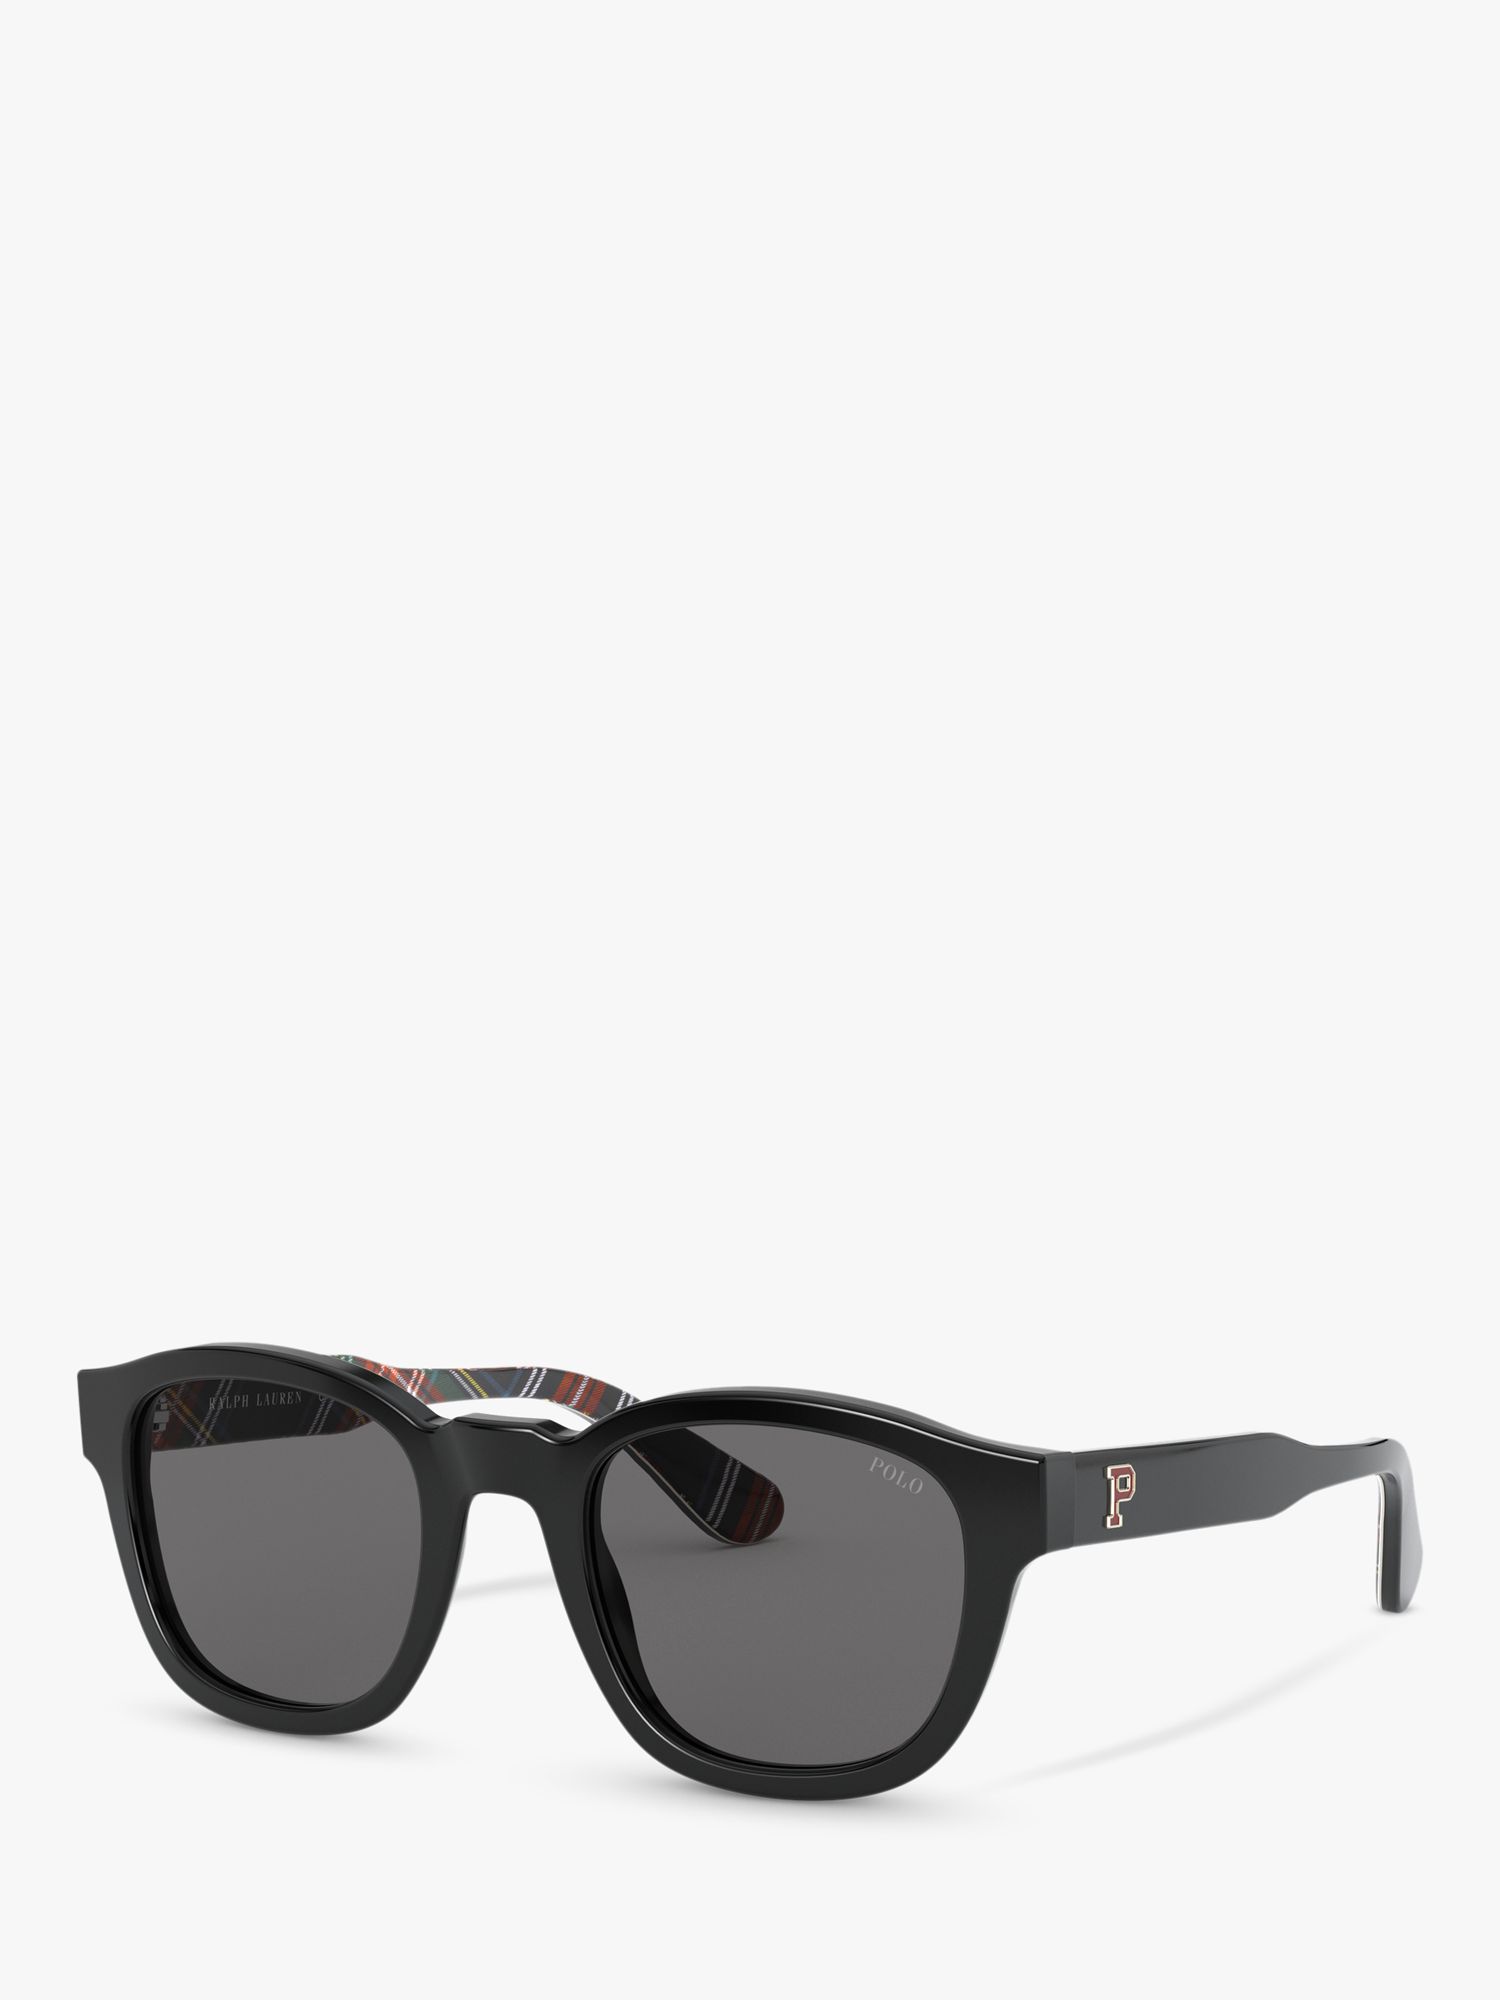 polo ralph sunglasses